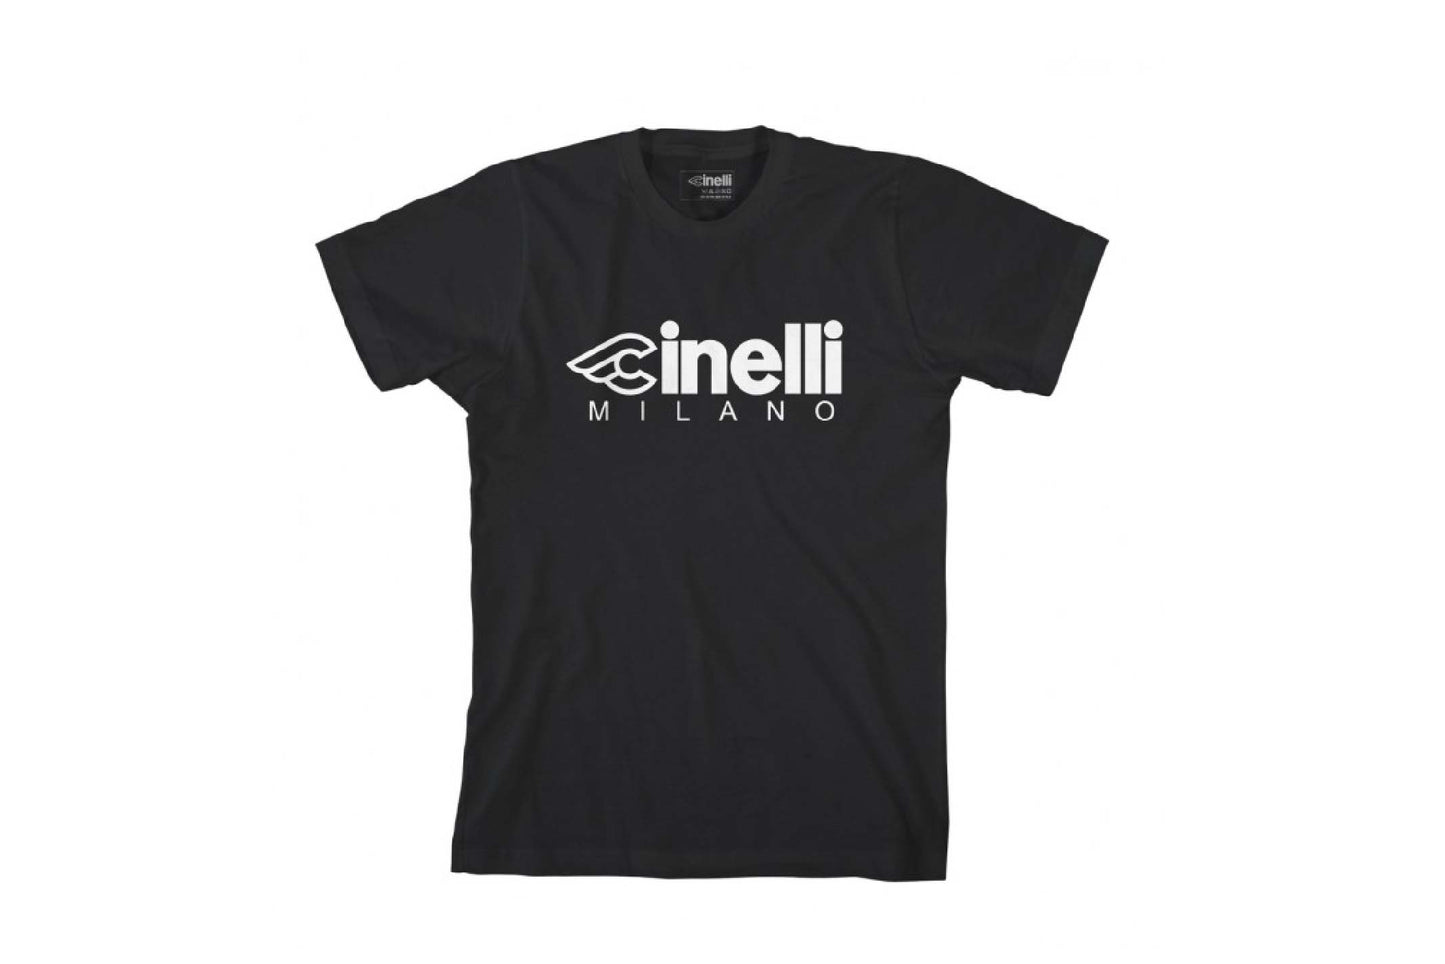 CINELLI Milano T-Shirt - FISHTAIL CYCLERY